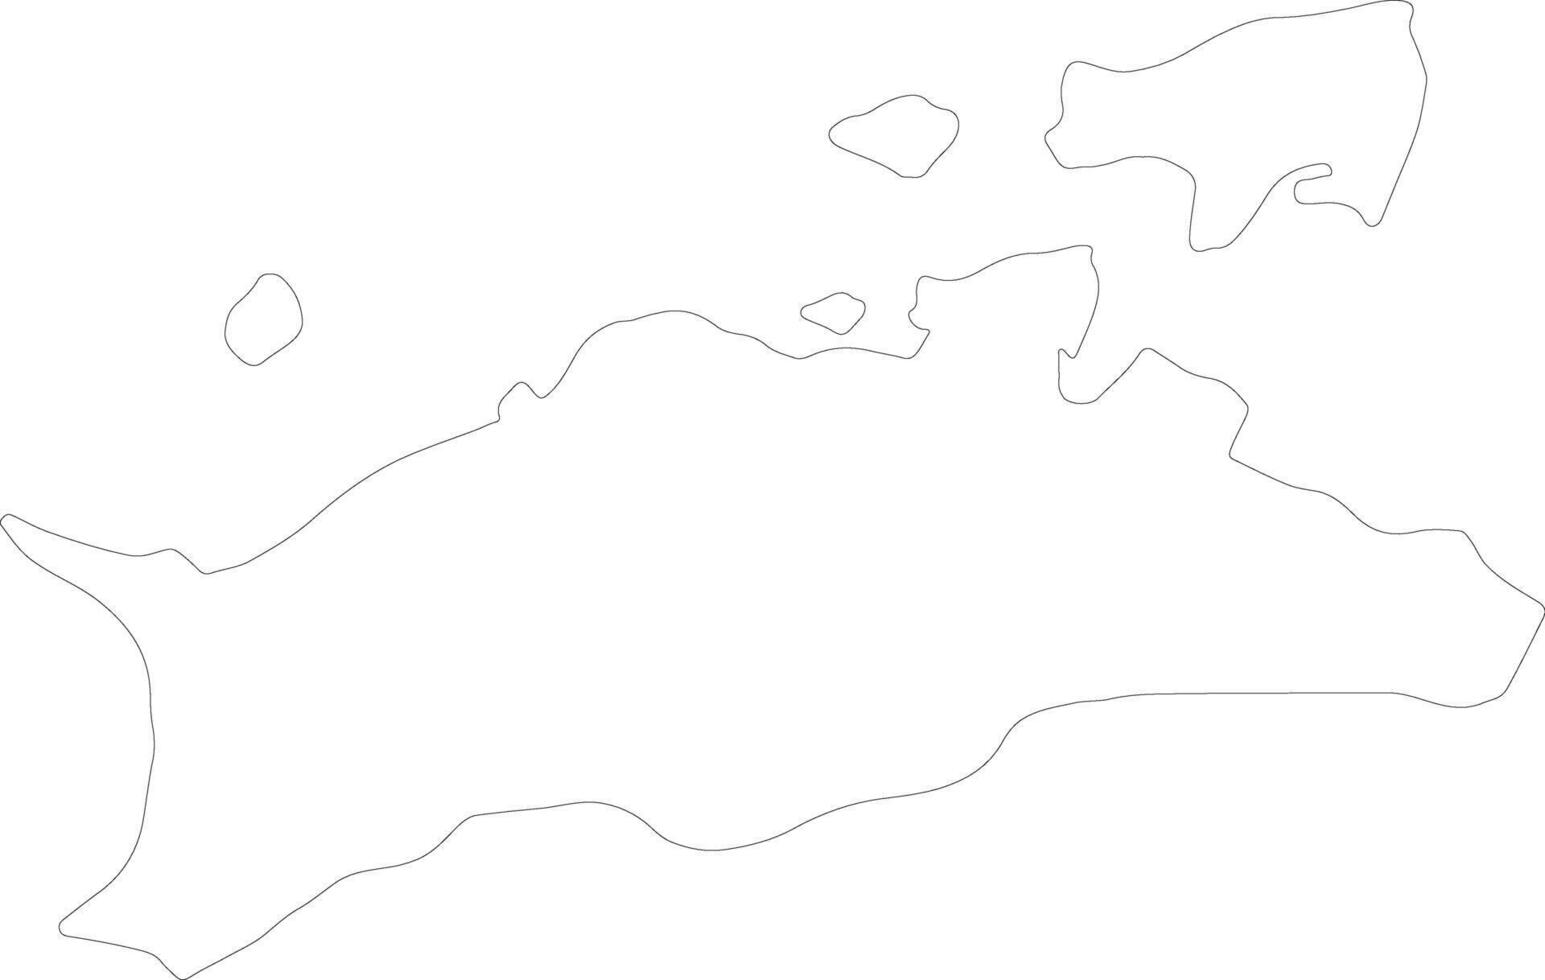 kagawa Japan schets kaart vector